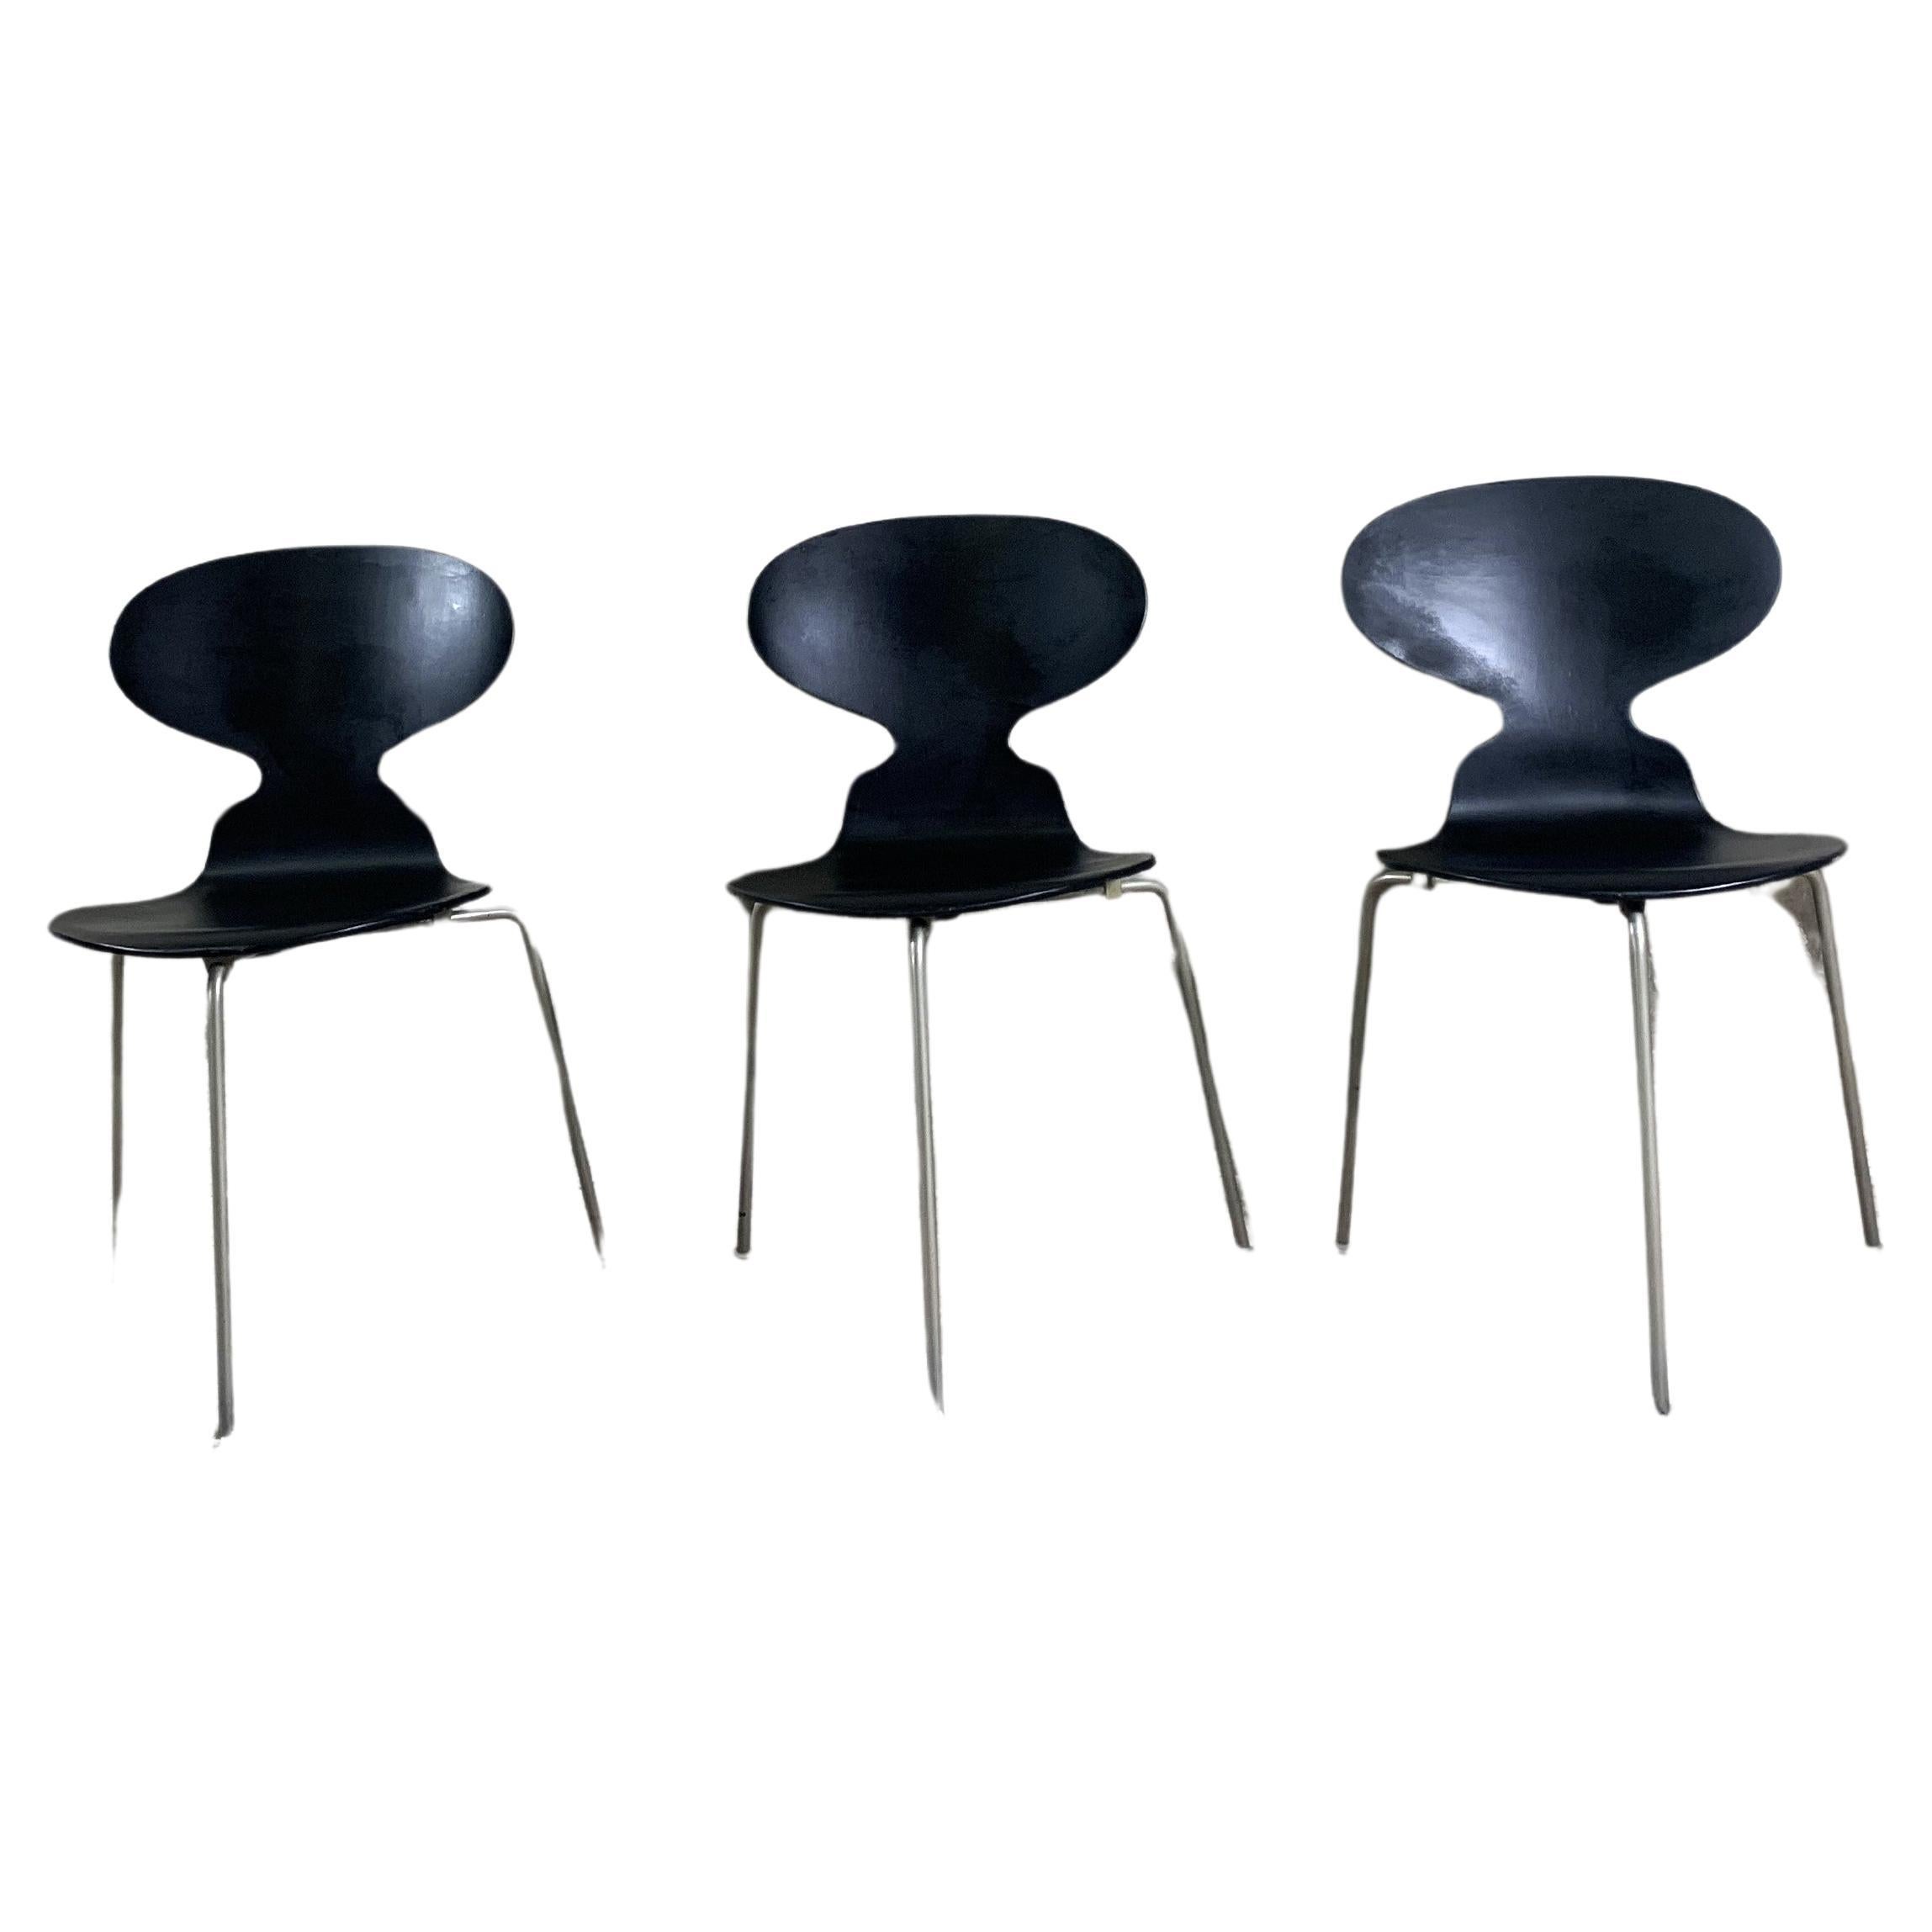 Arne Jacobsen Ant Chair